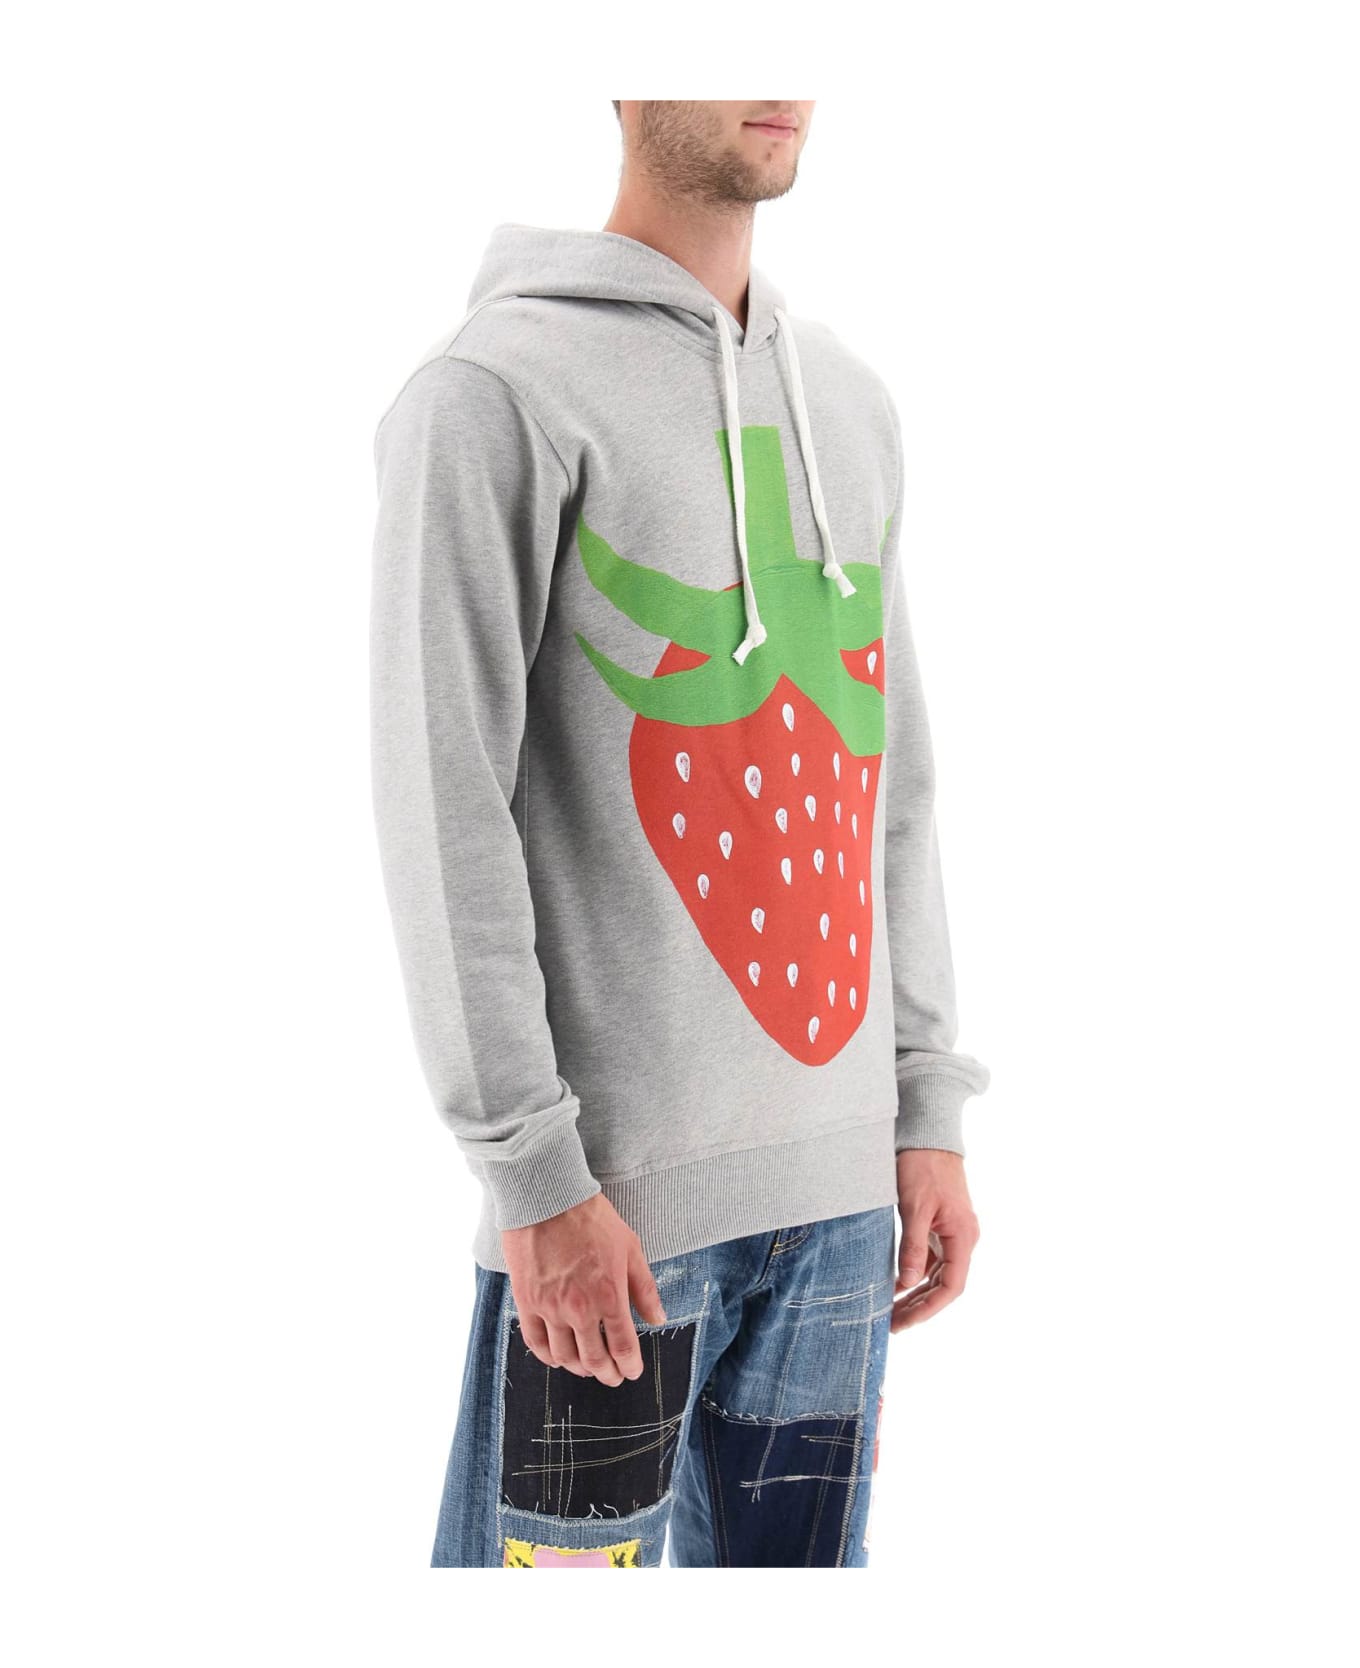 Comme des Garçons Shirt Strawberry Printed Hoodie - TOP GREY (Grey)